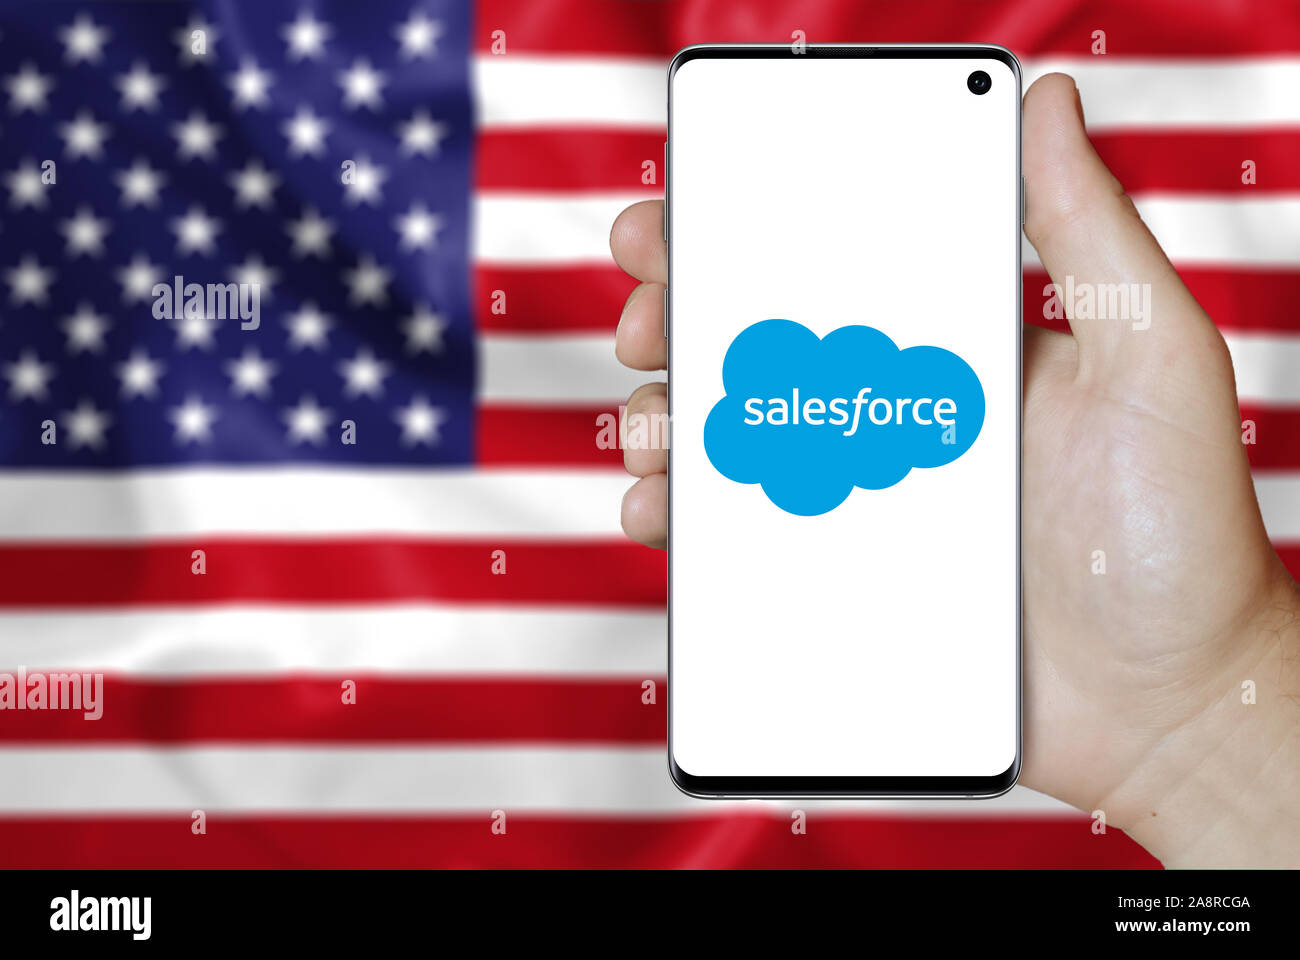 Logo of public company Salesforce displayed on a smartphone. Flag of USA  background. Credit: PIXDUCE Stock Photo - Alamy